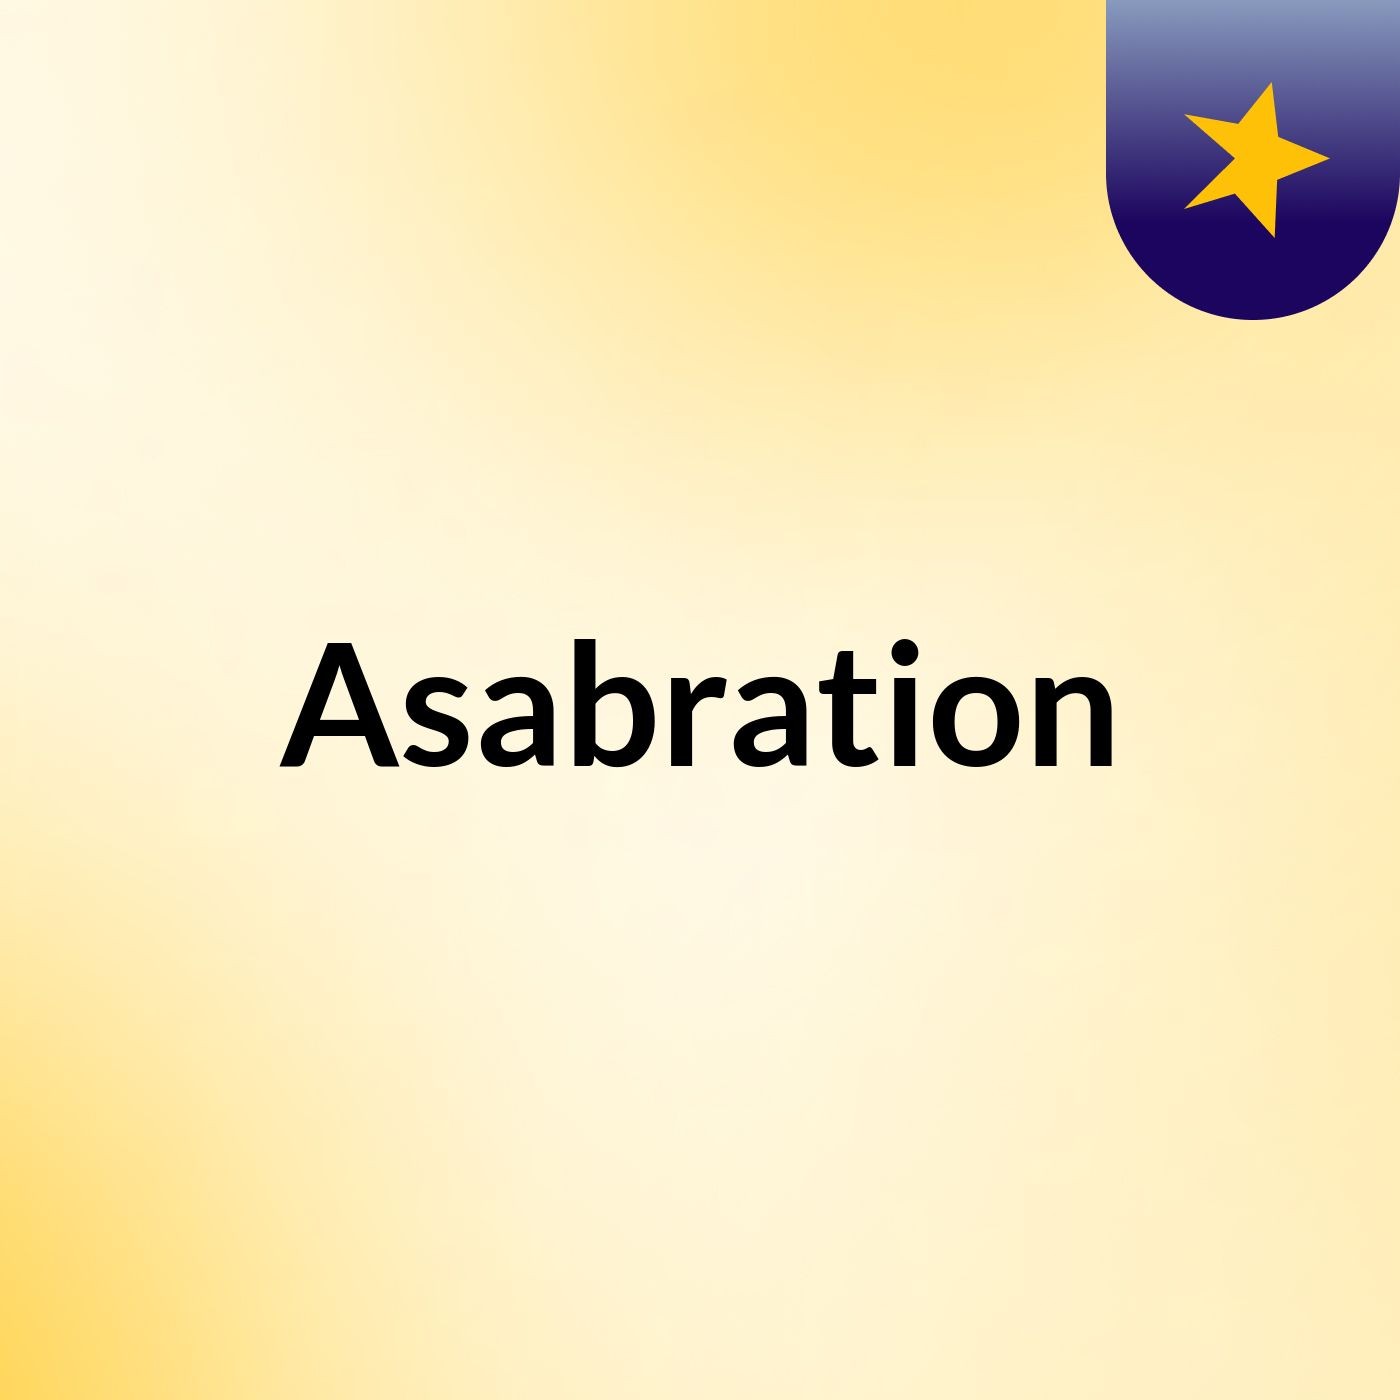 Asabration